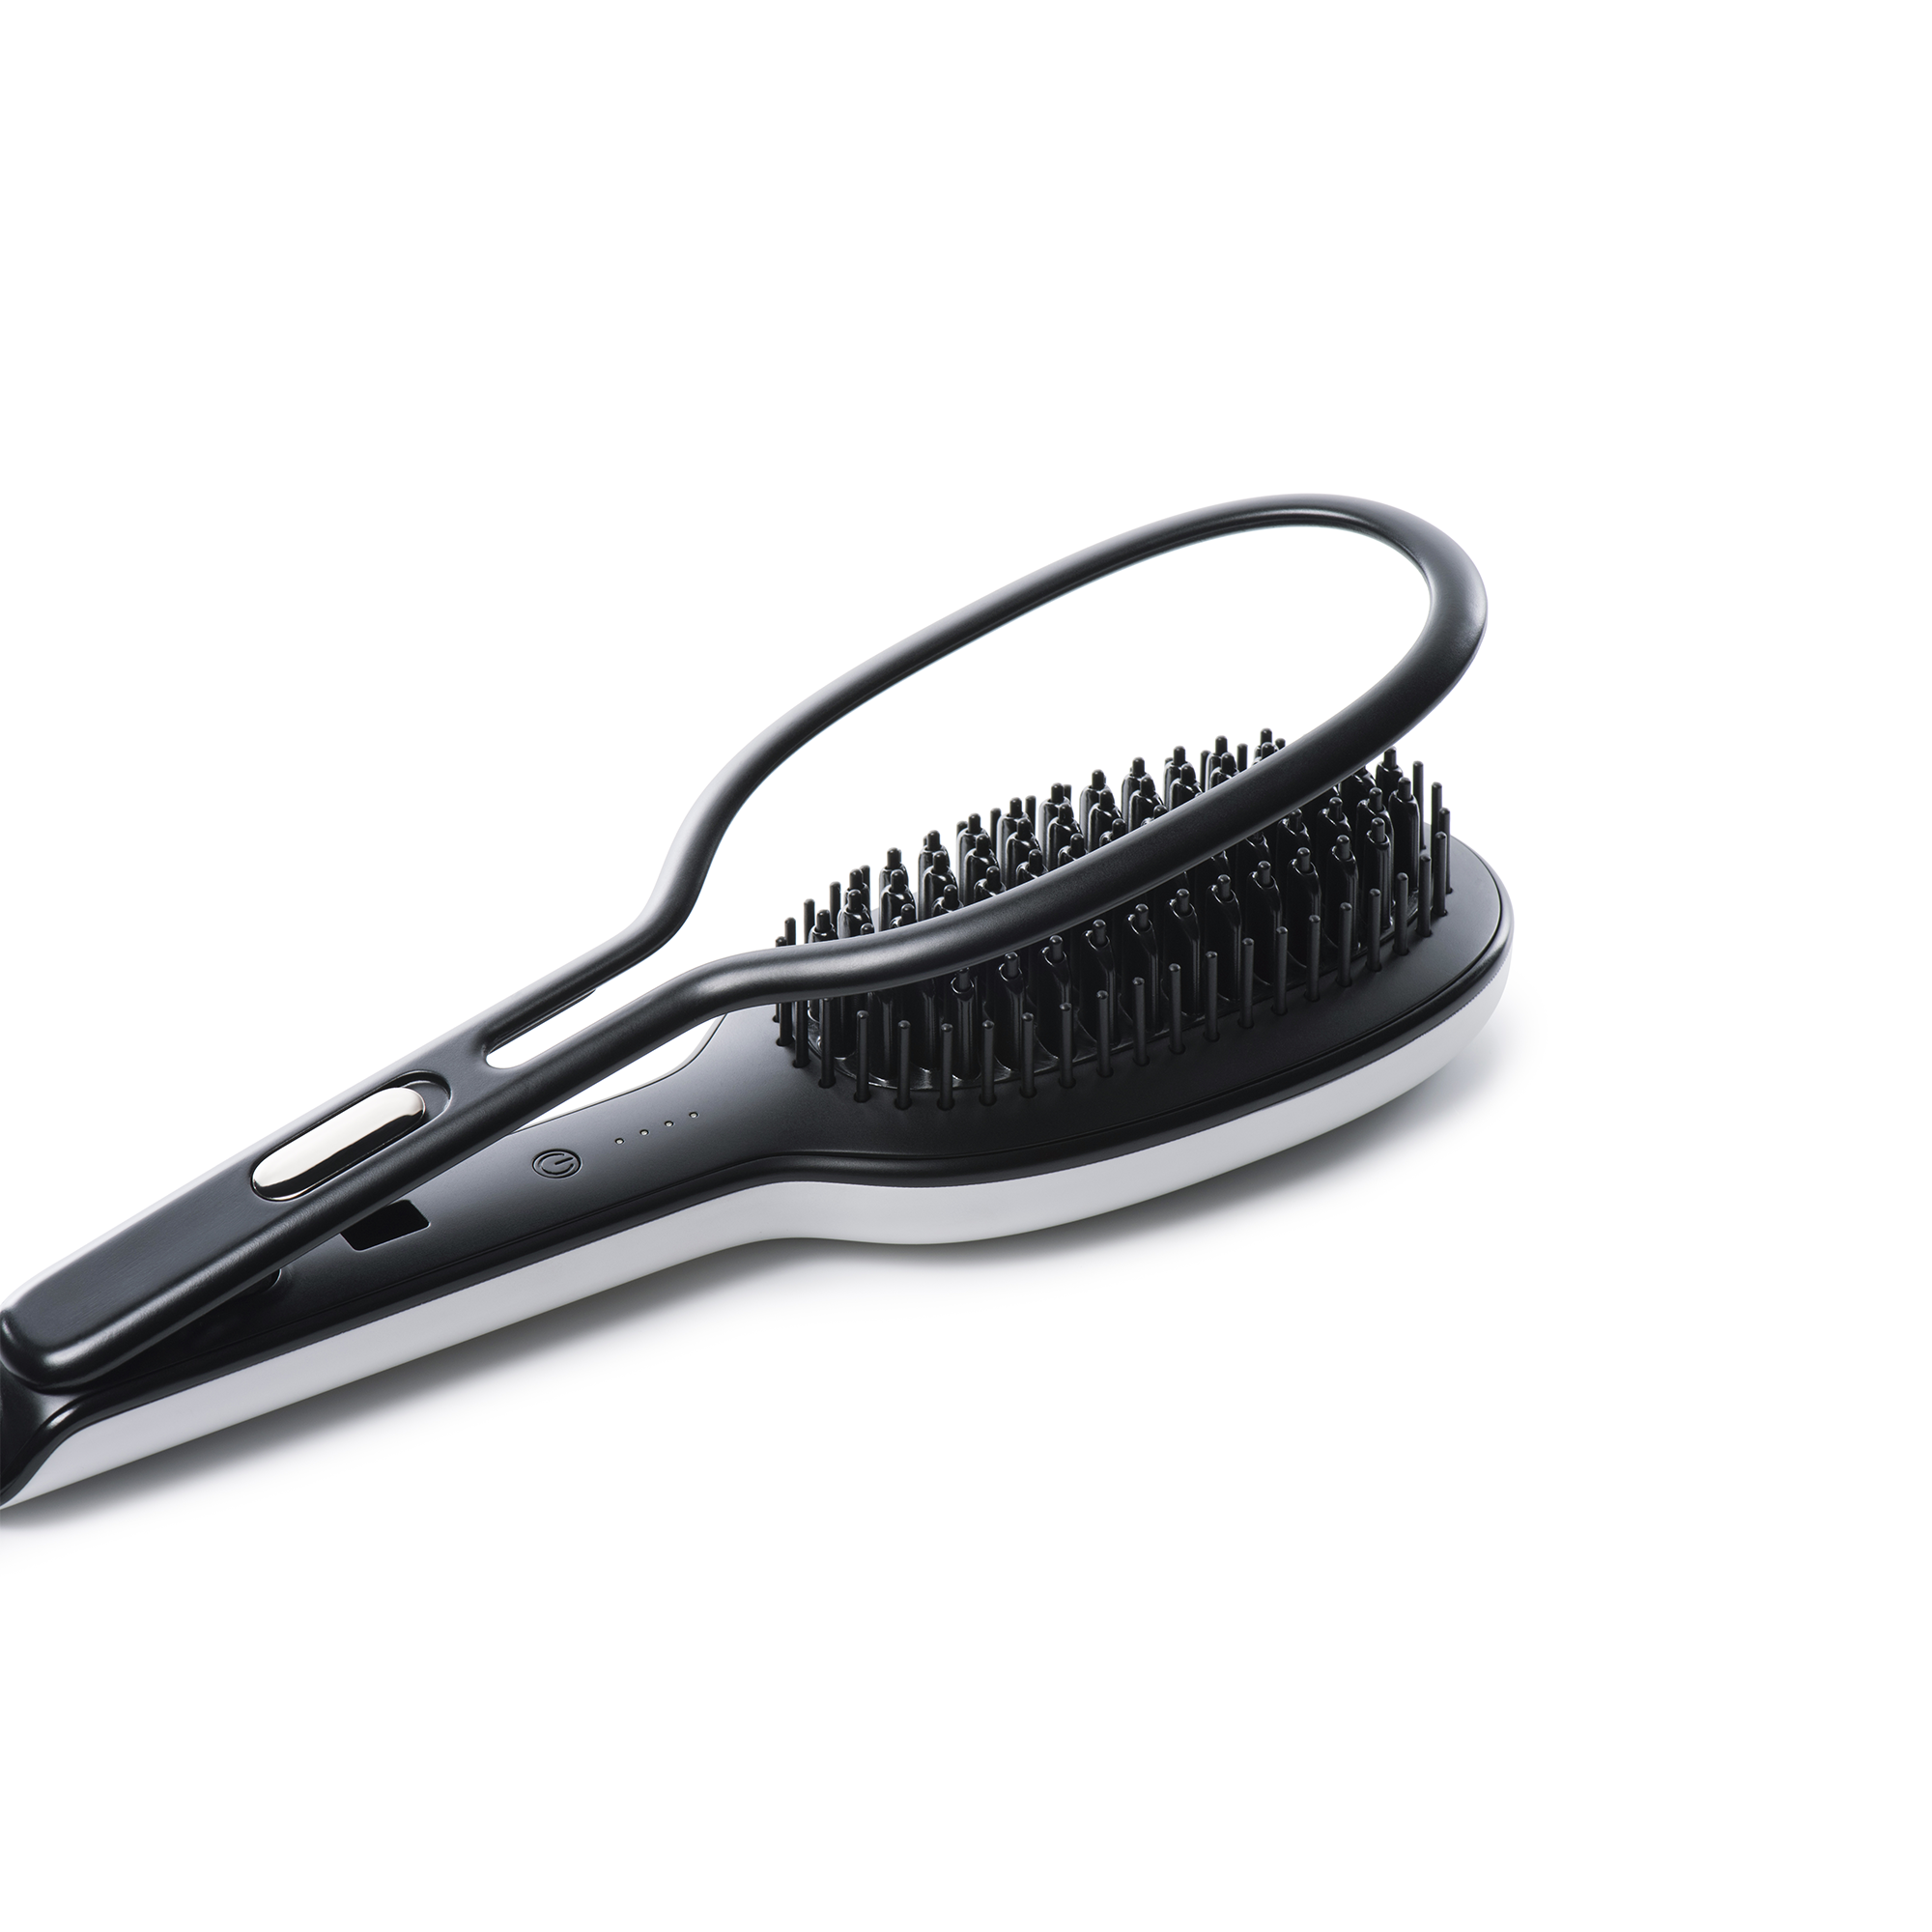 Glossie Ceramic Hair Straightening Brush by InStyler